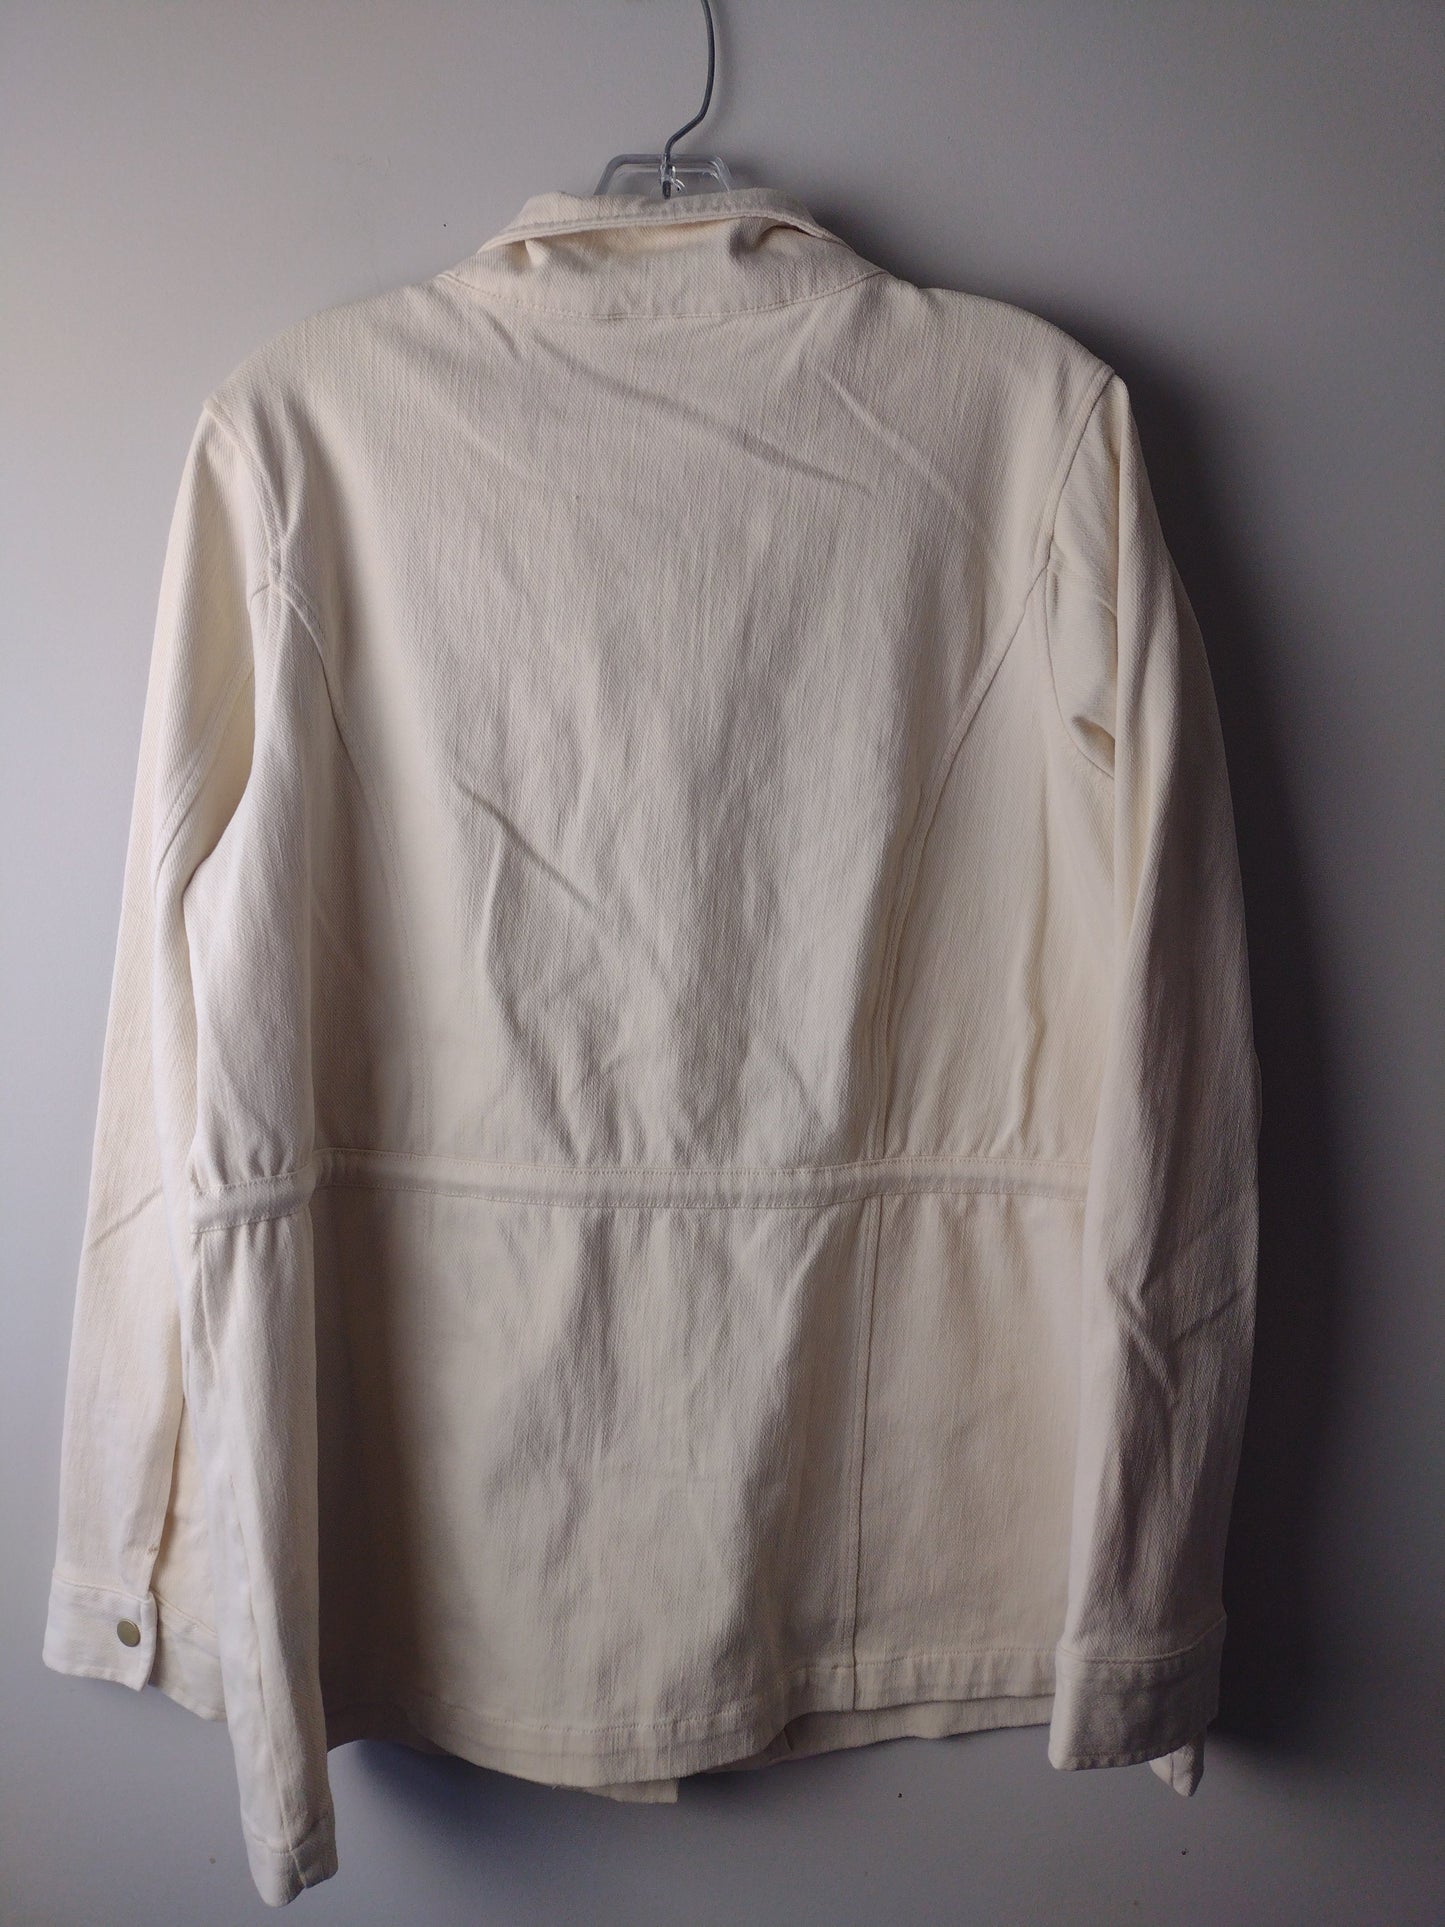 Jacket Other By Diane Gilman  Size: L